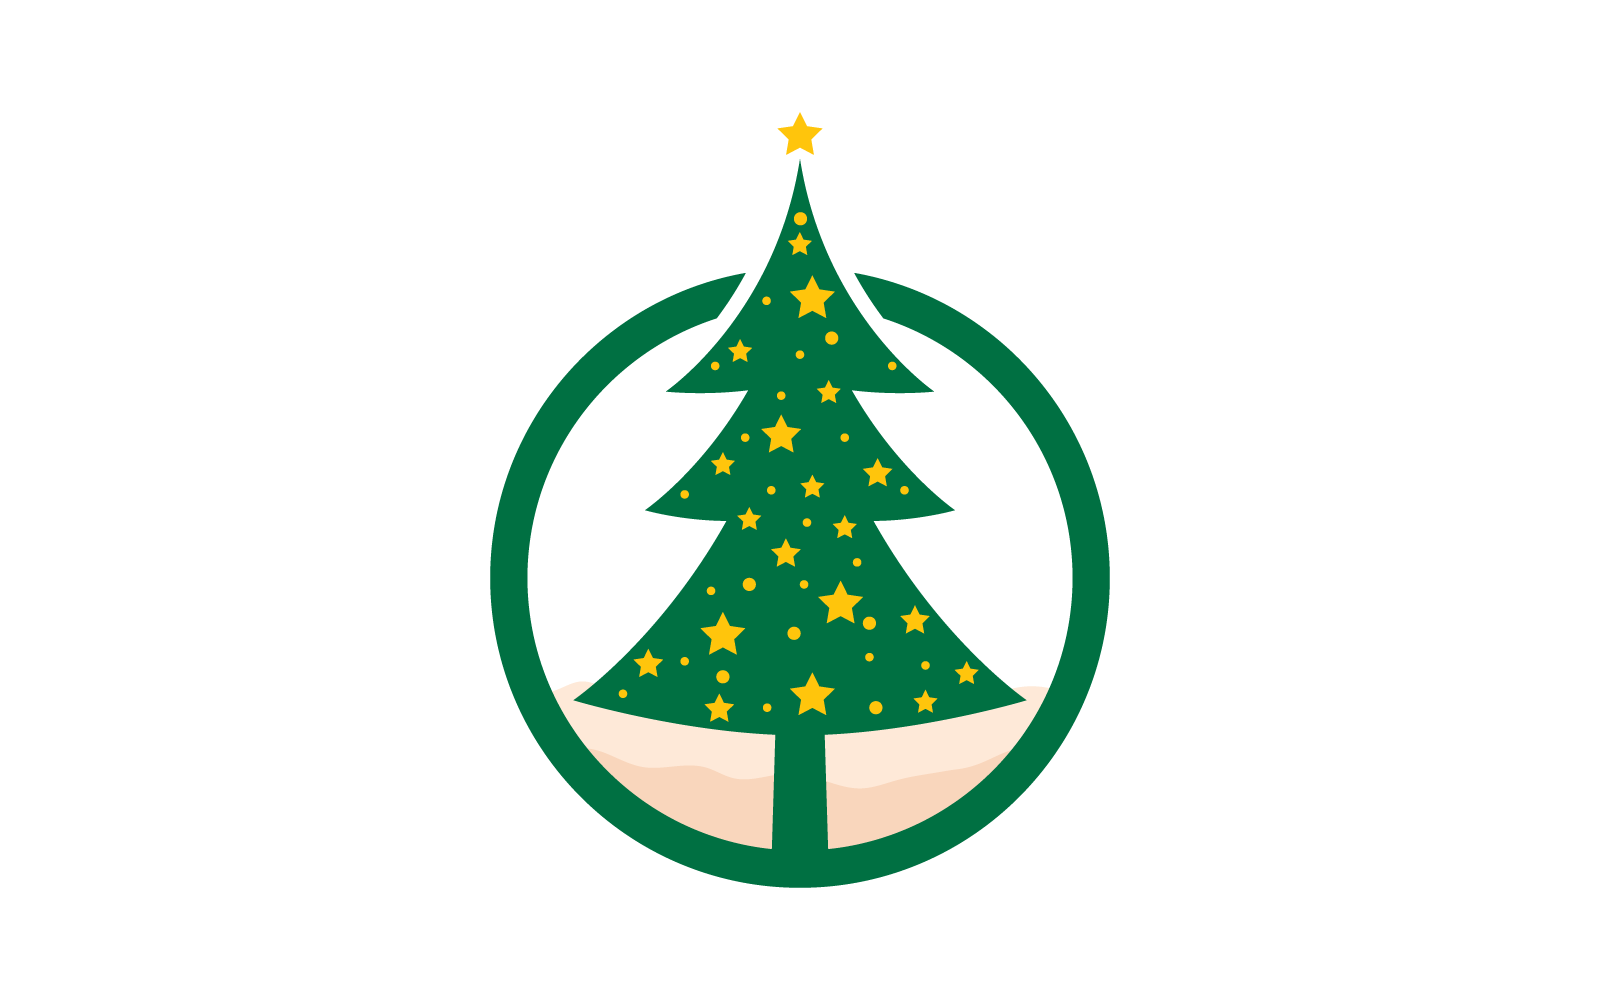 Pine tree illustration icon vector design template